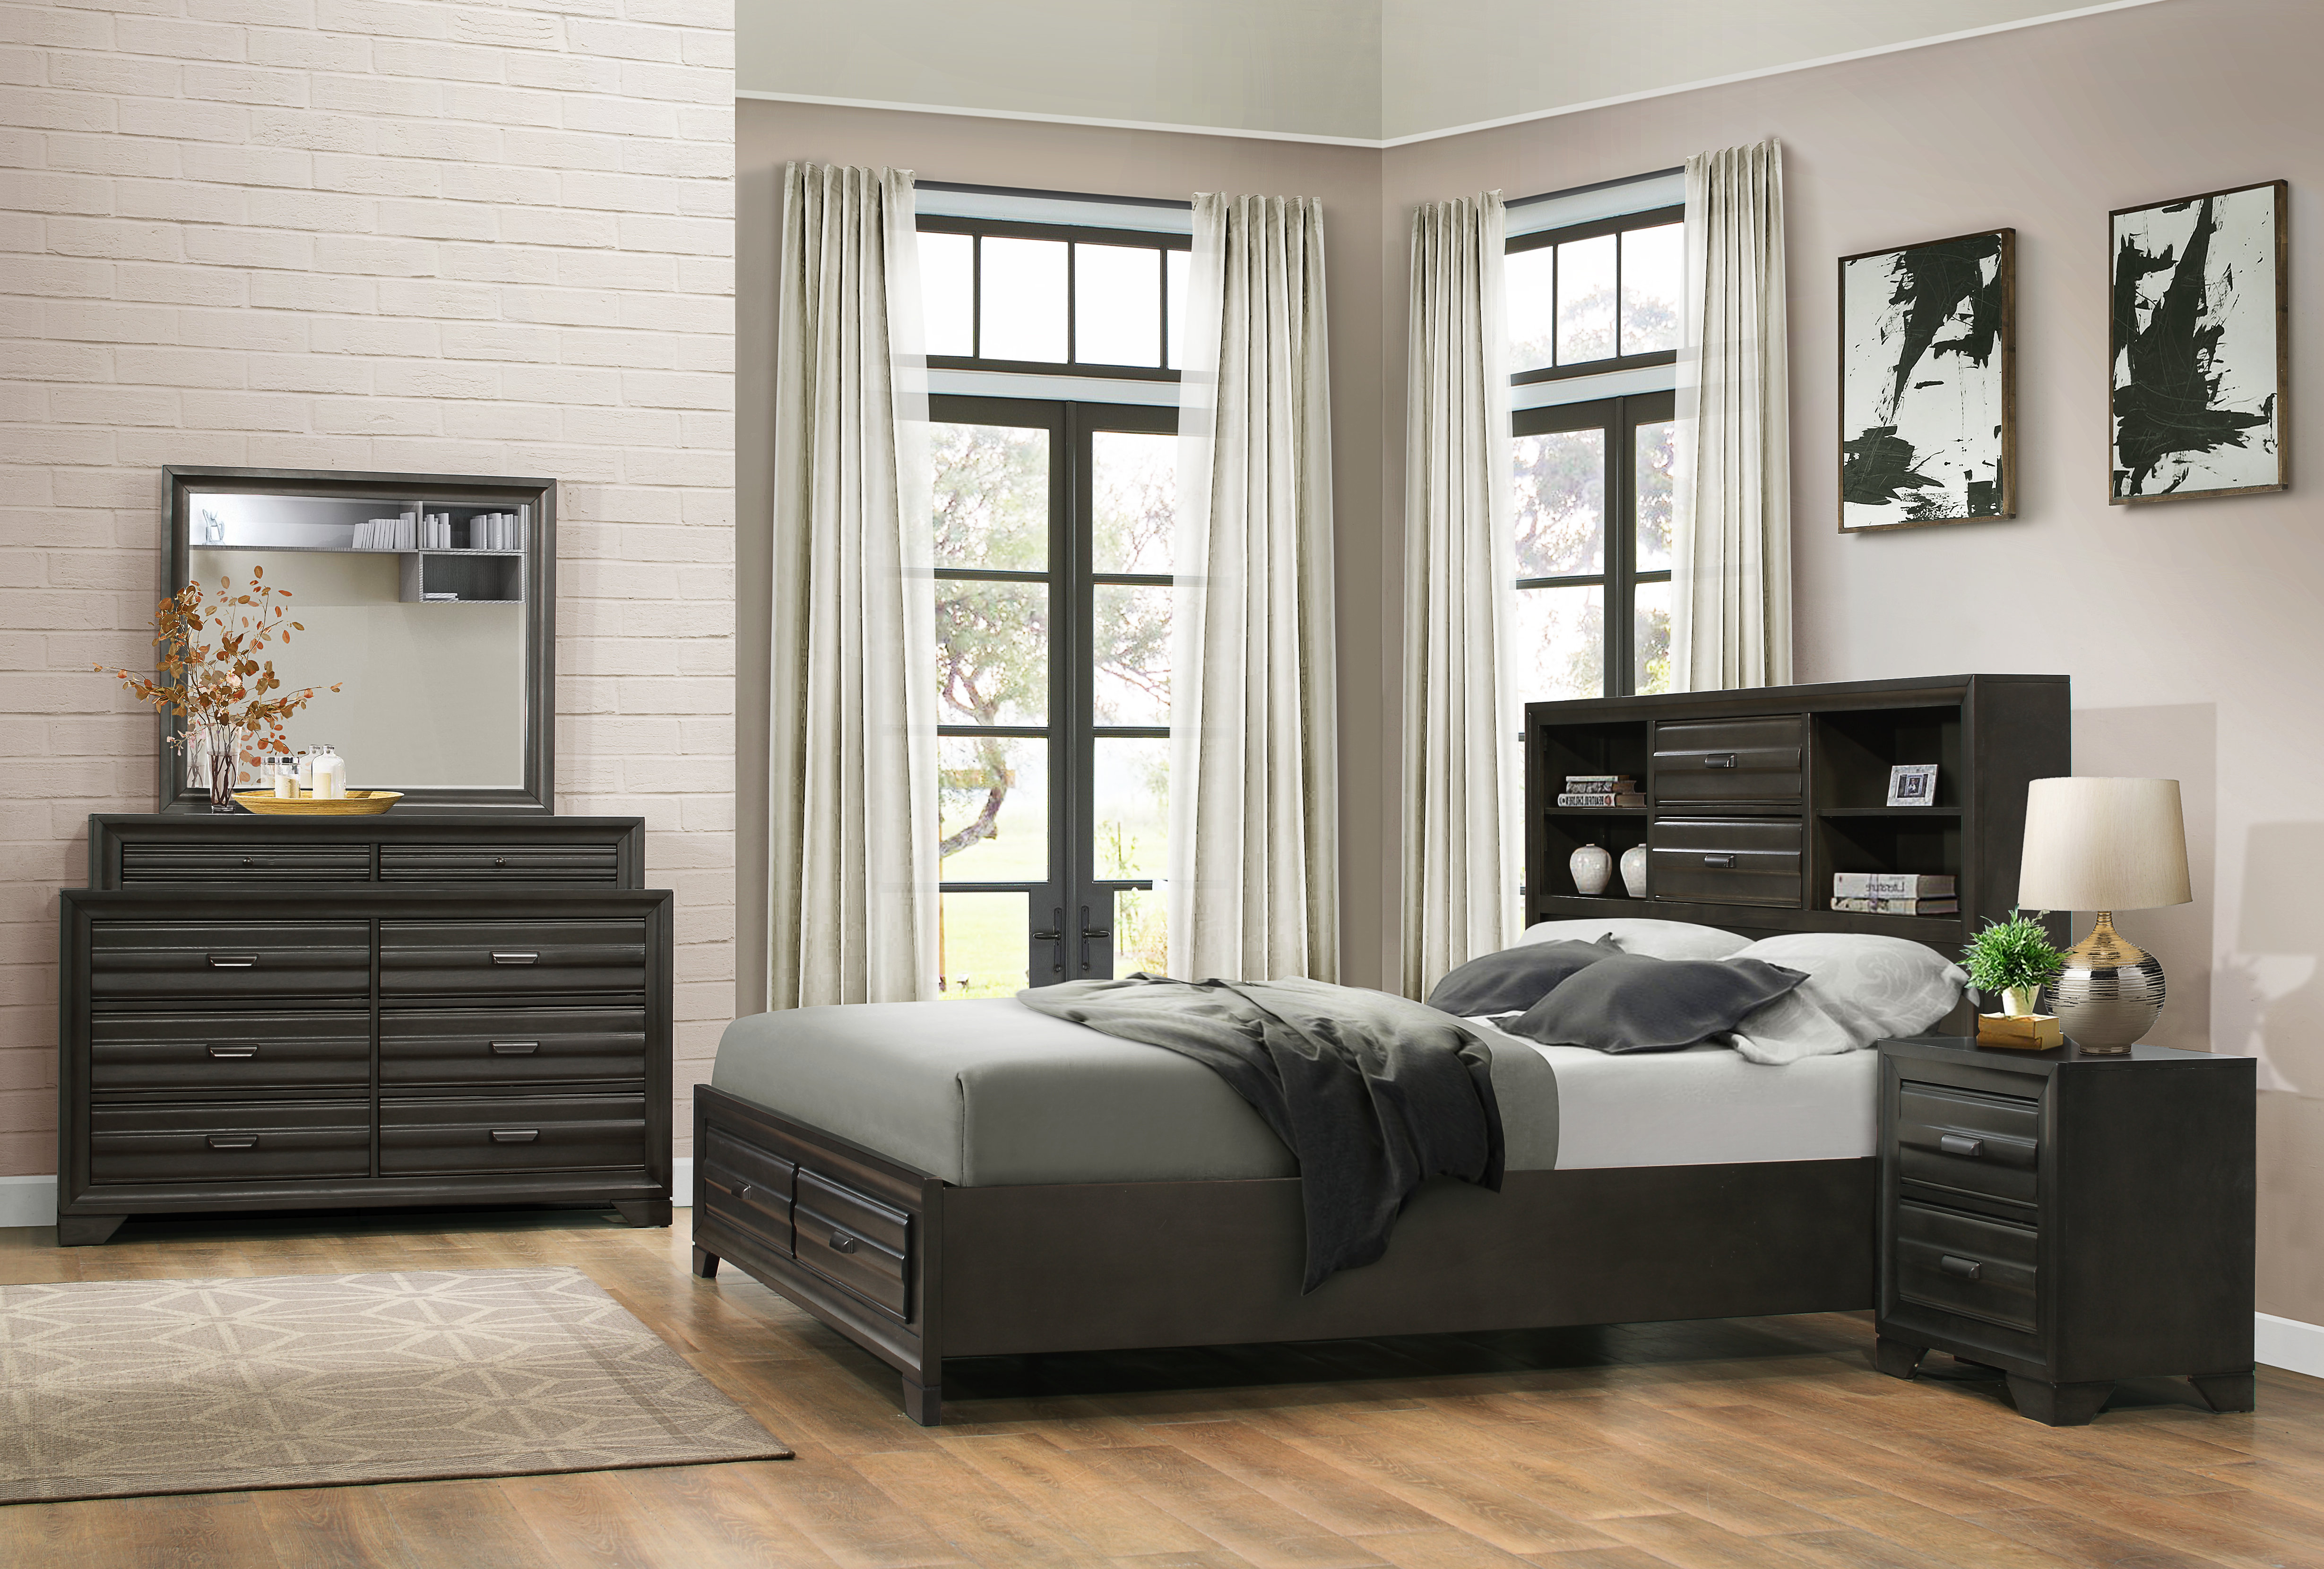 Blasco Wood 4 Piece Bedroom Set regarding size 4917 X 3320